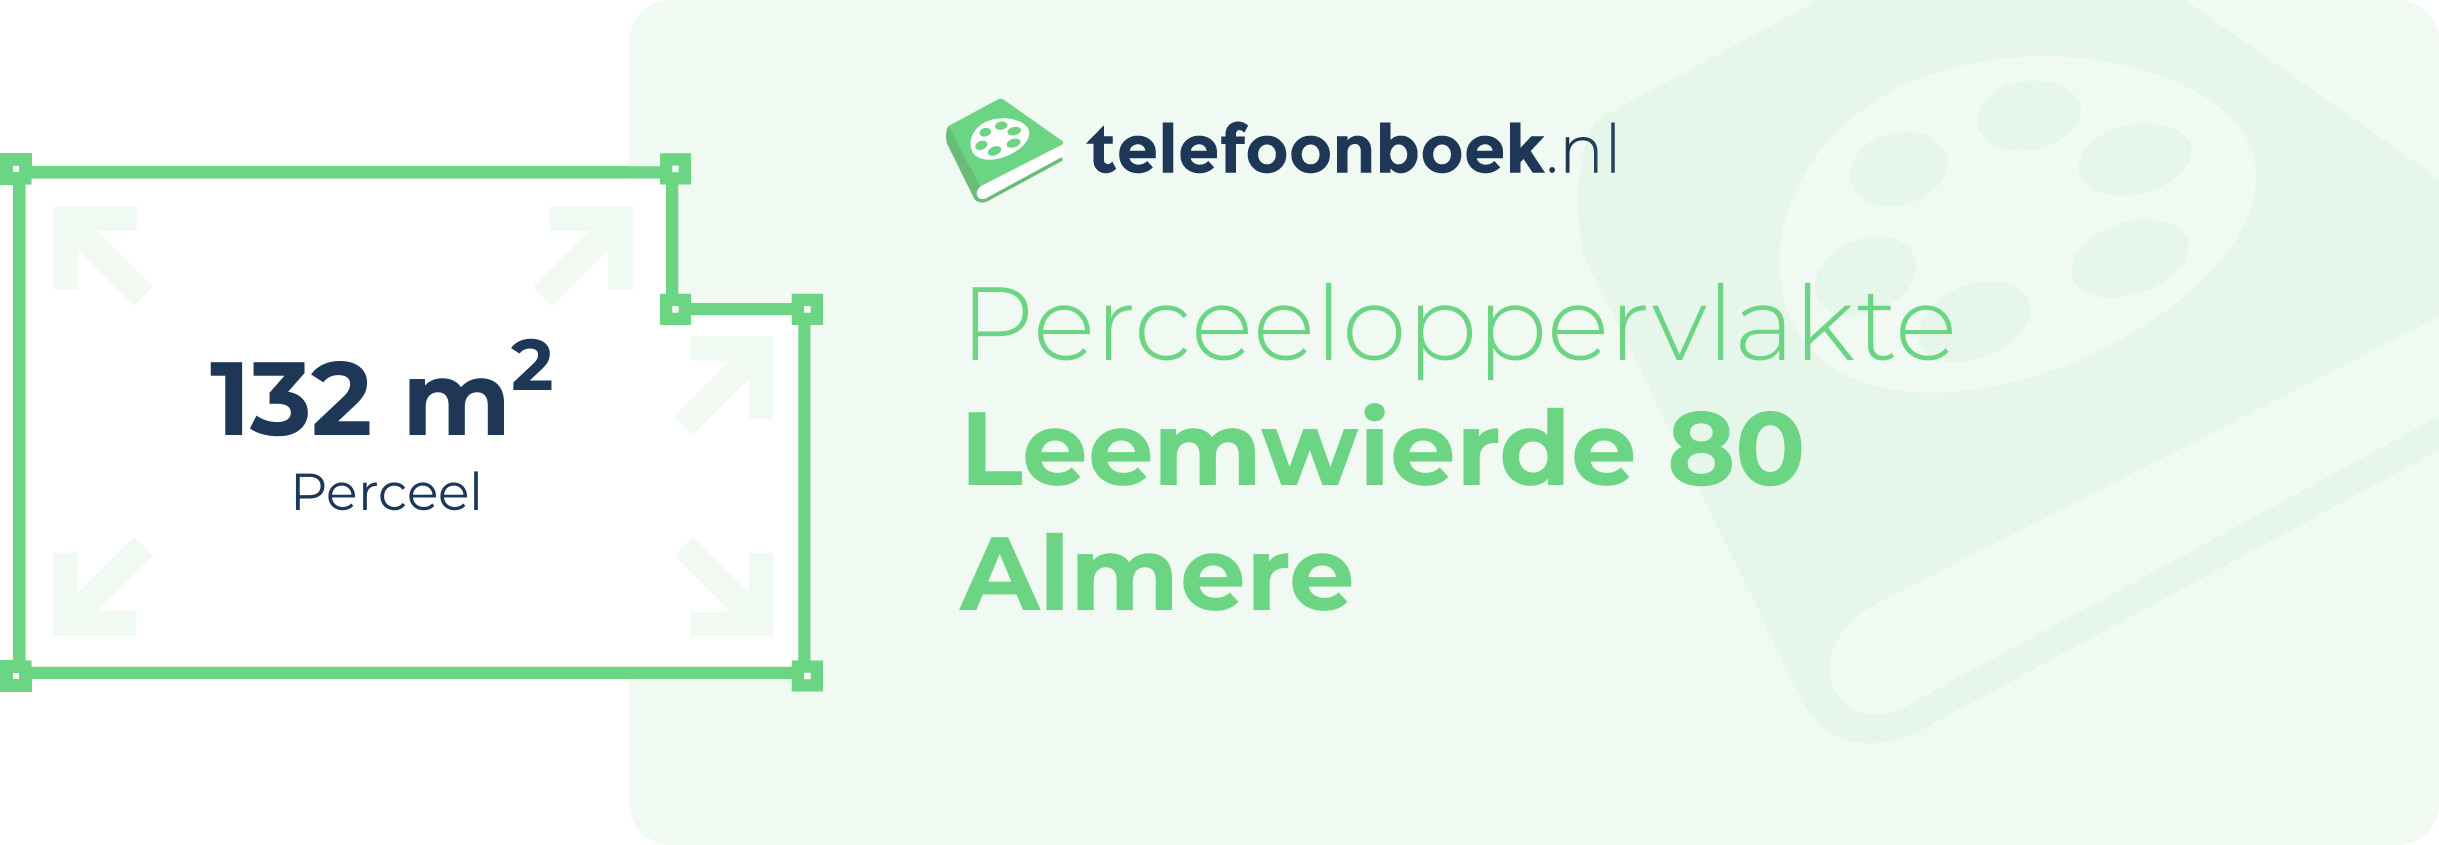 Perceeloppervlakte Leemwierde 80 Almere